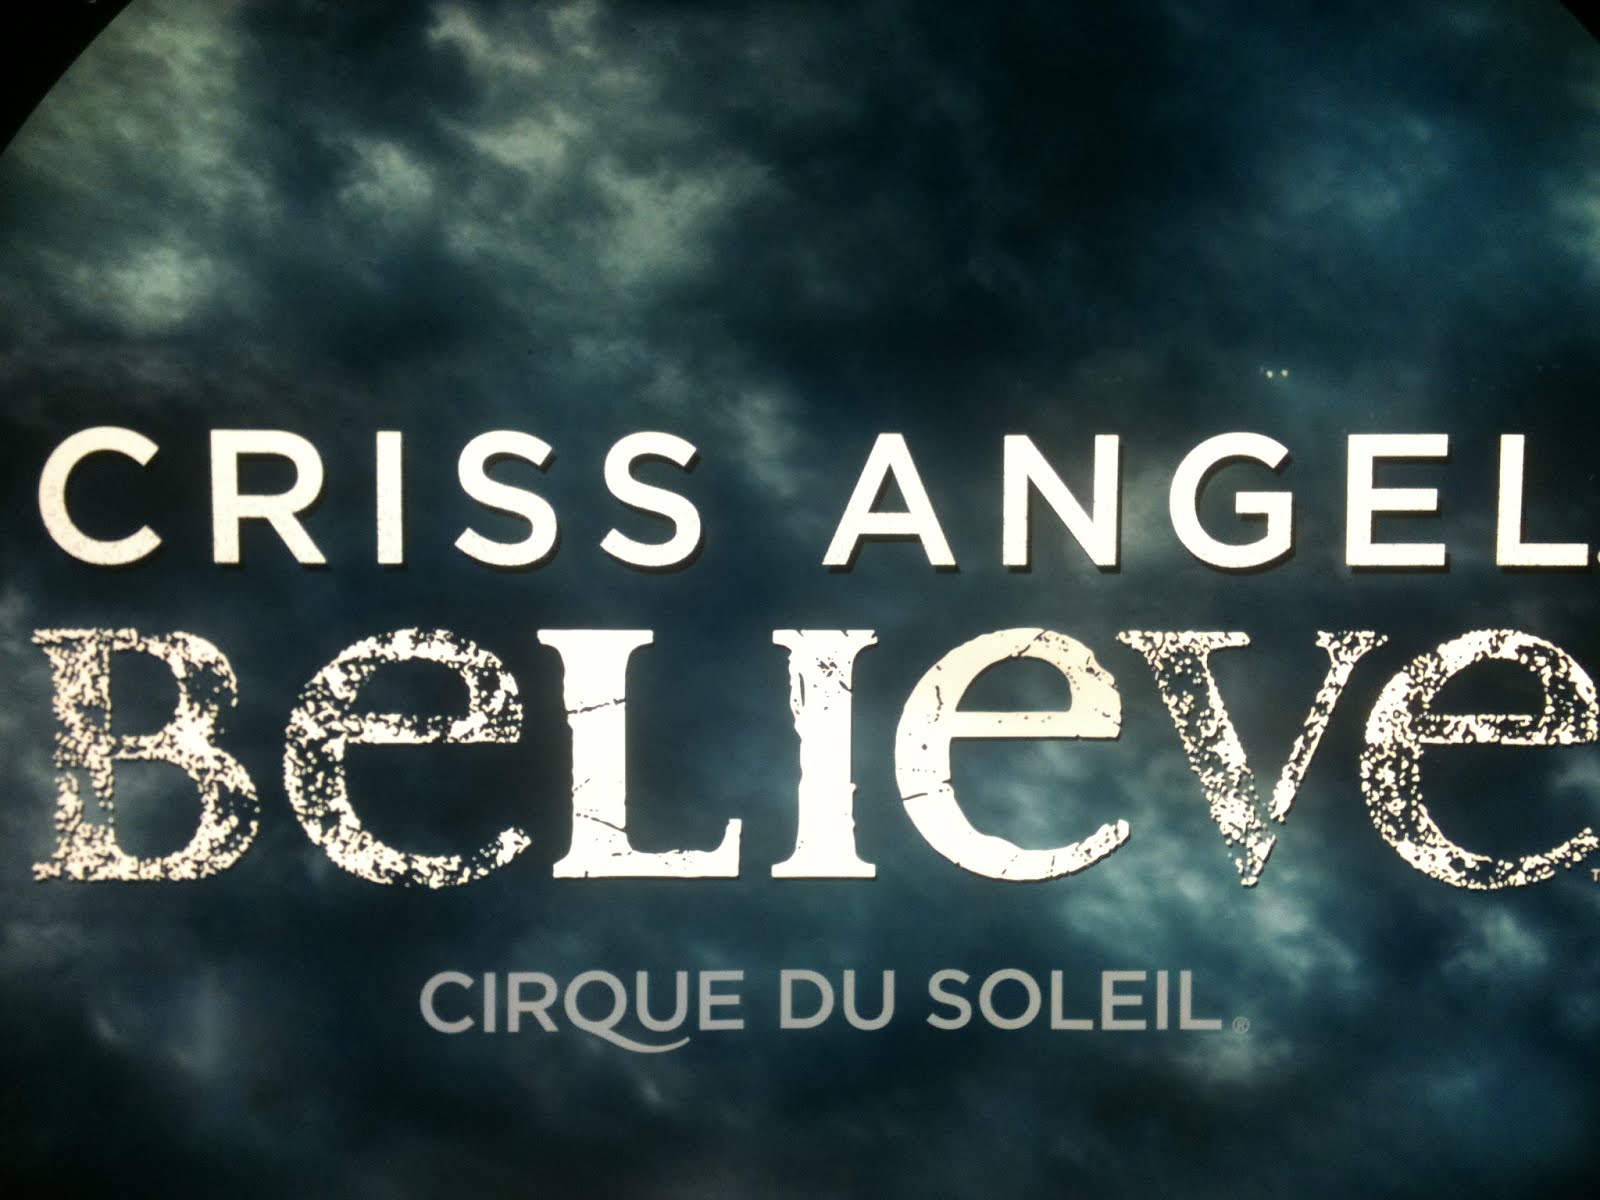 Cirque Du Soleil Criss Angel BeLIEve lie